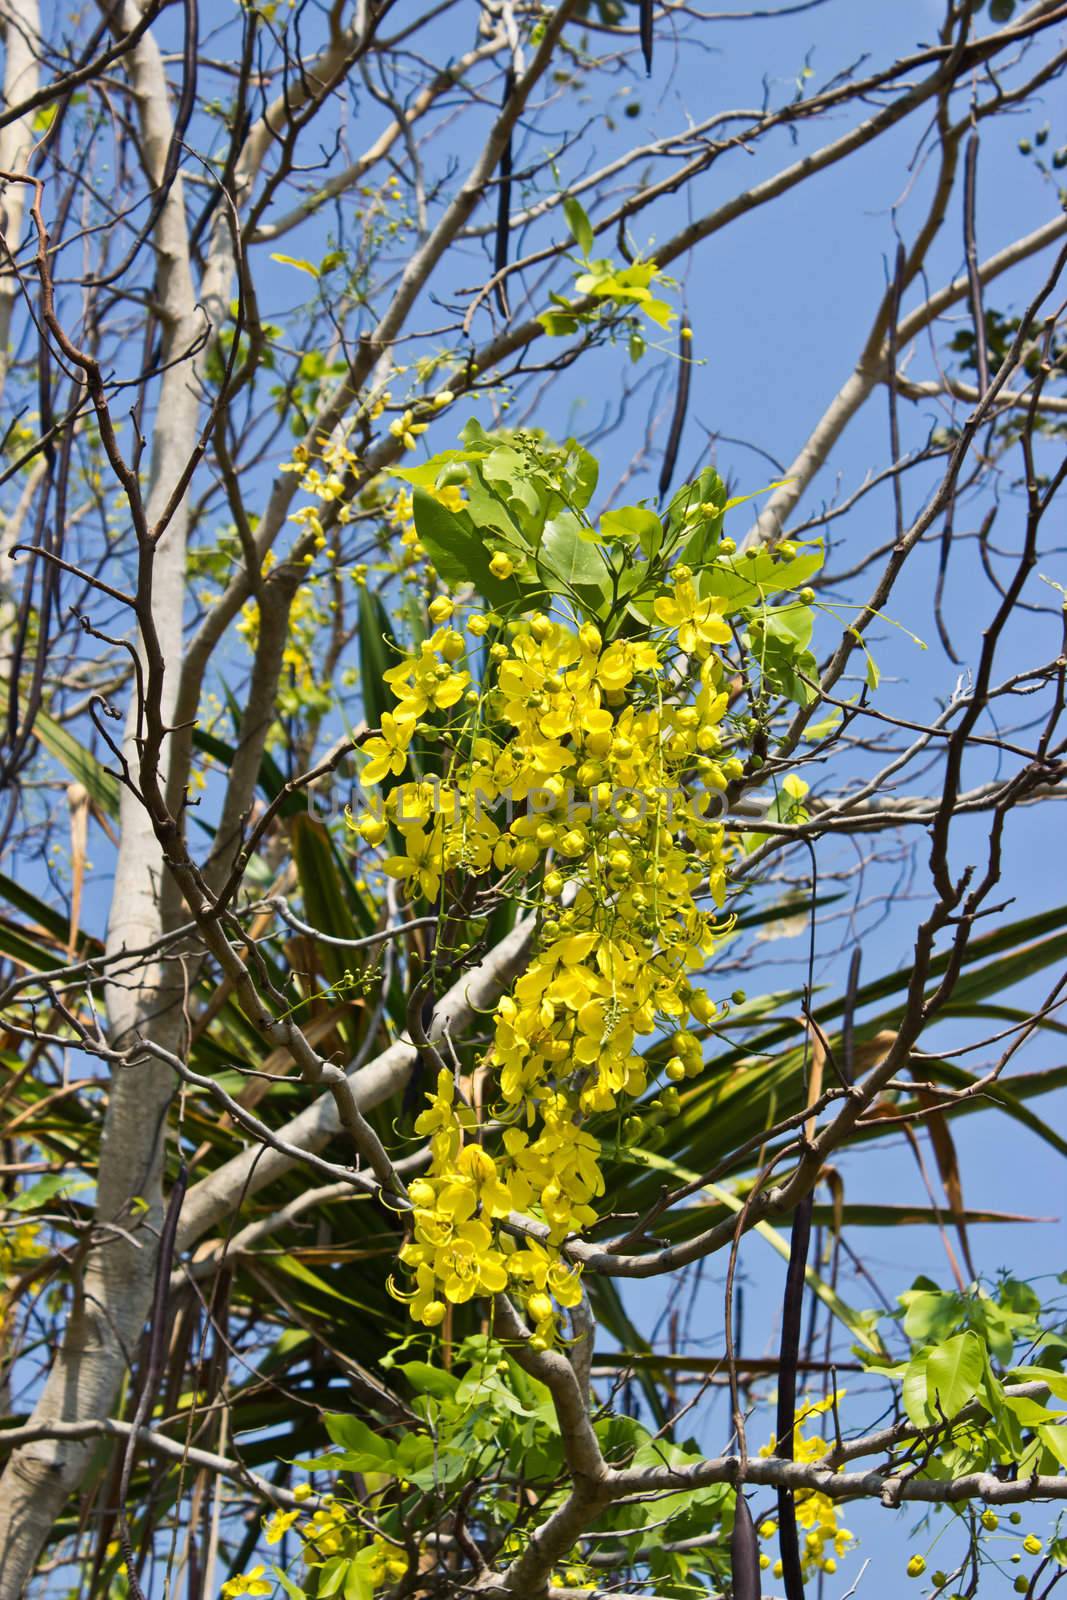 Golden Flower or Cassia Fistula, national flower of Thailand by kurapy